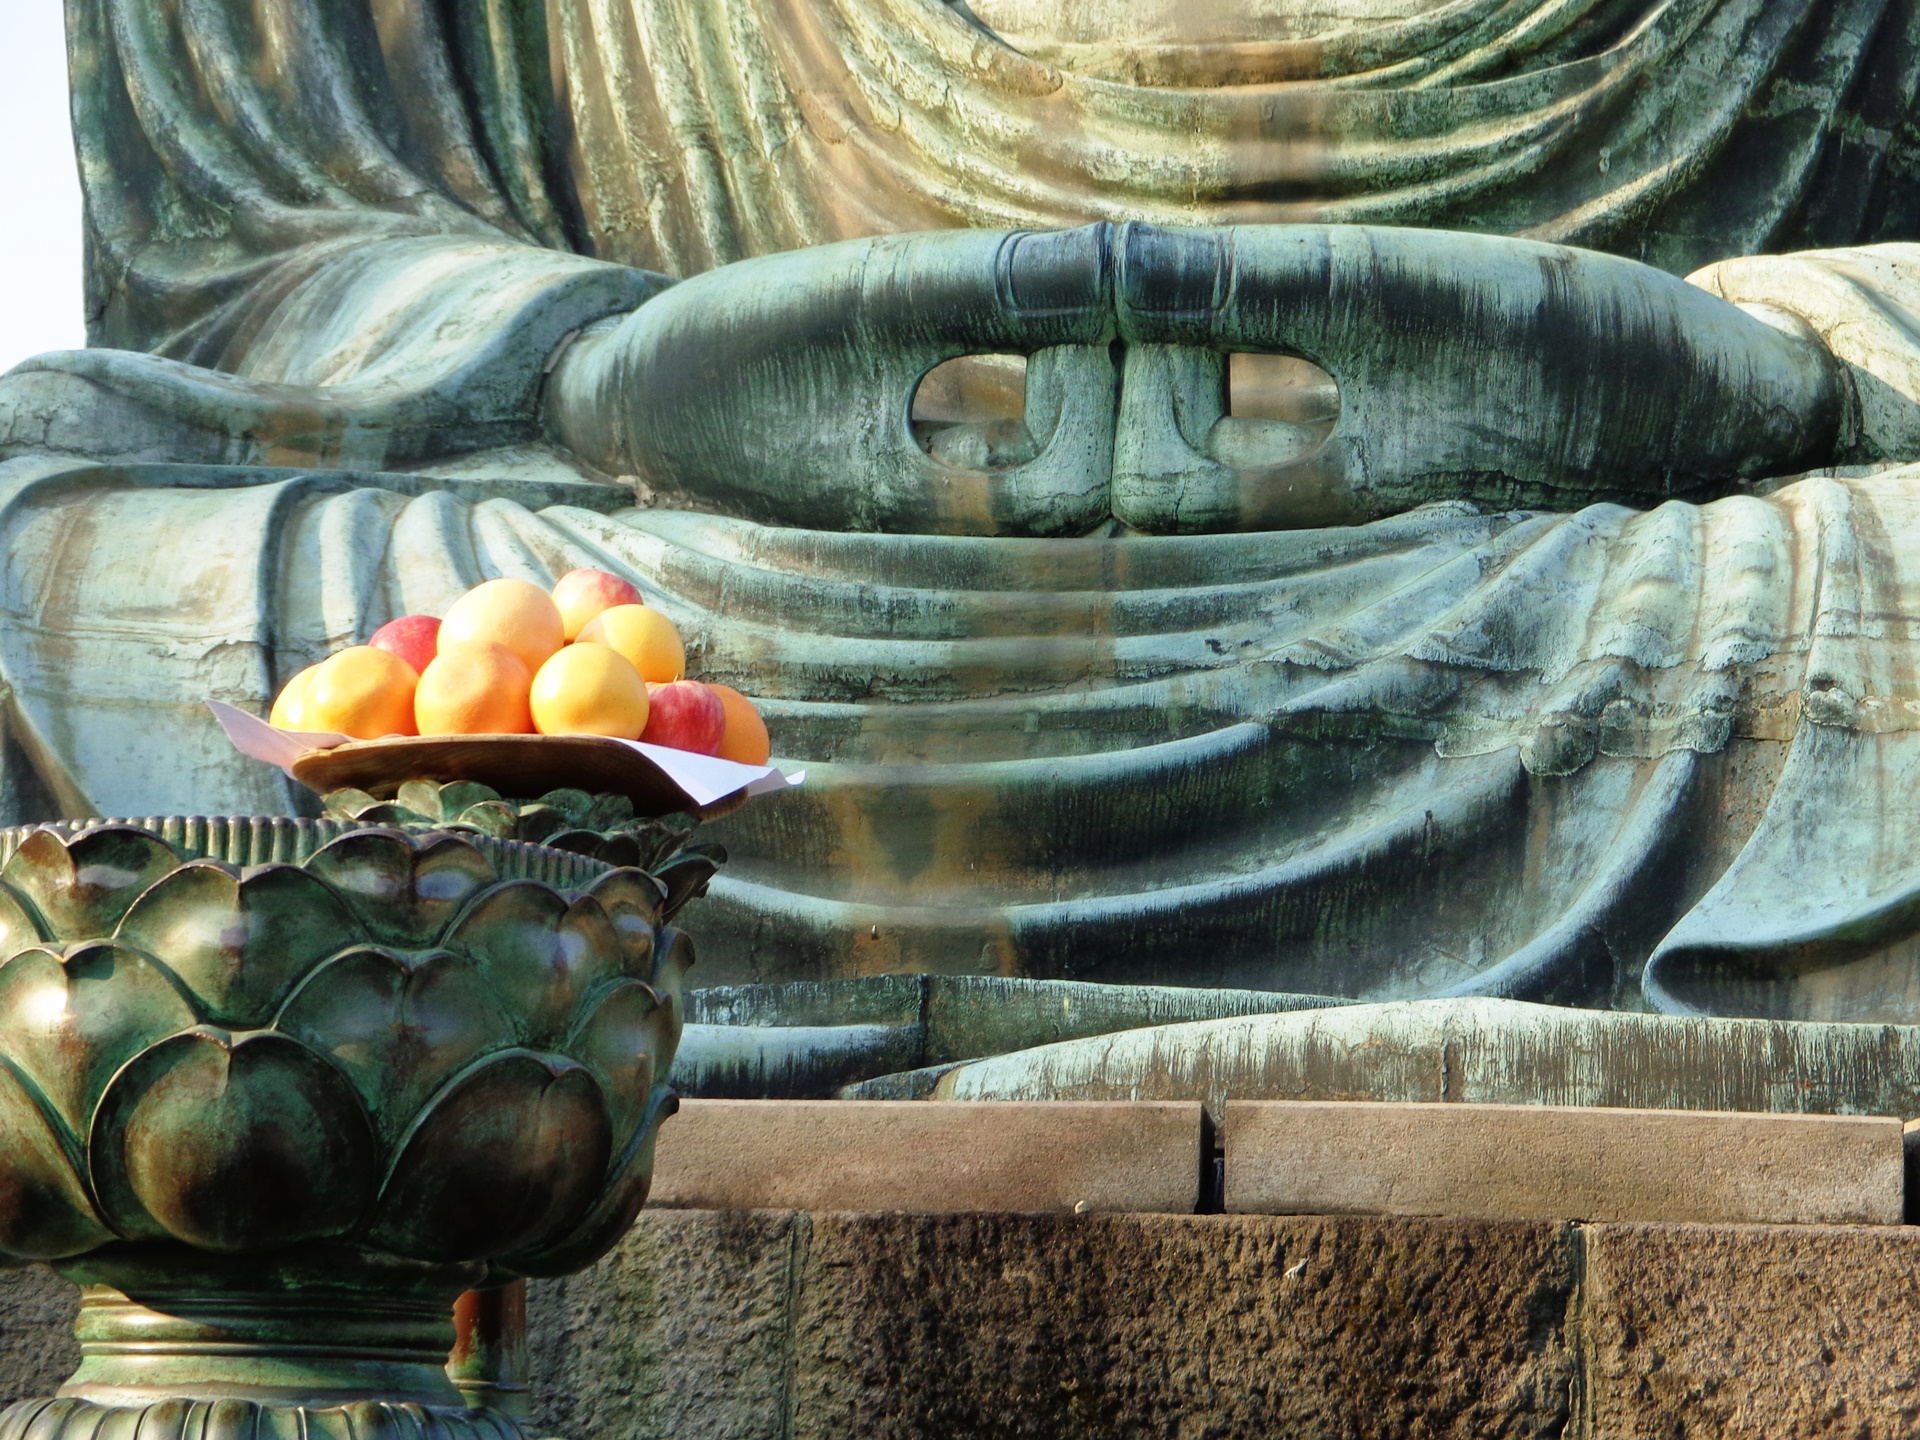 Lap of the Great Buddha, Kamakura, Japan